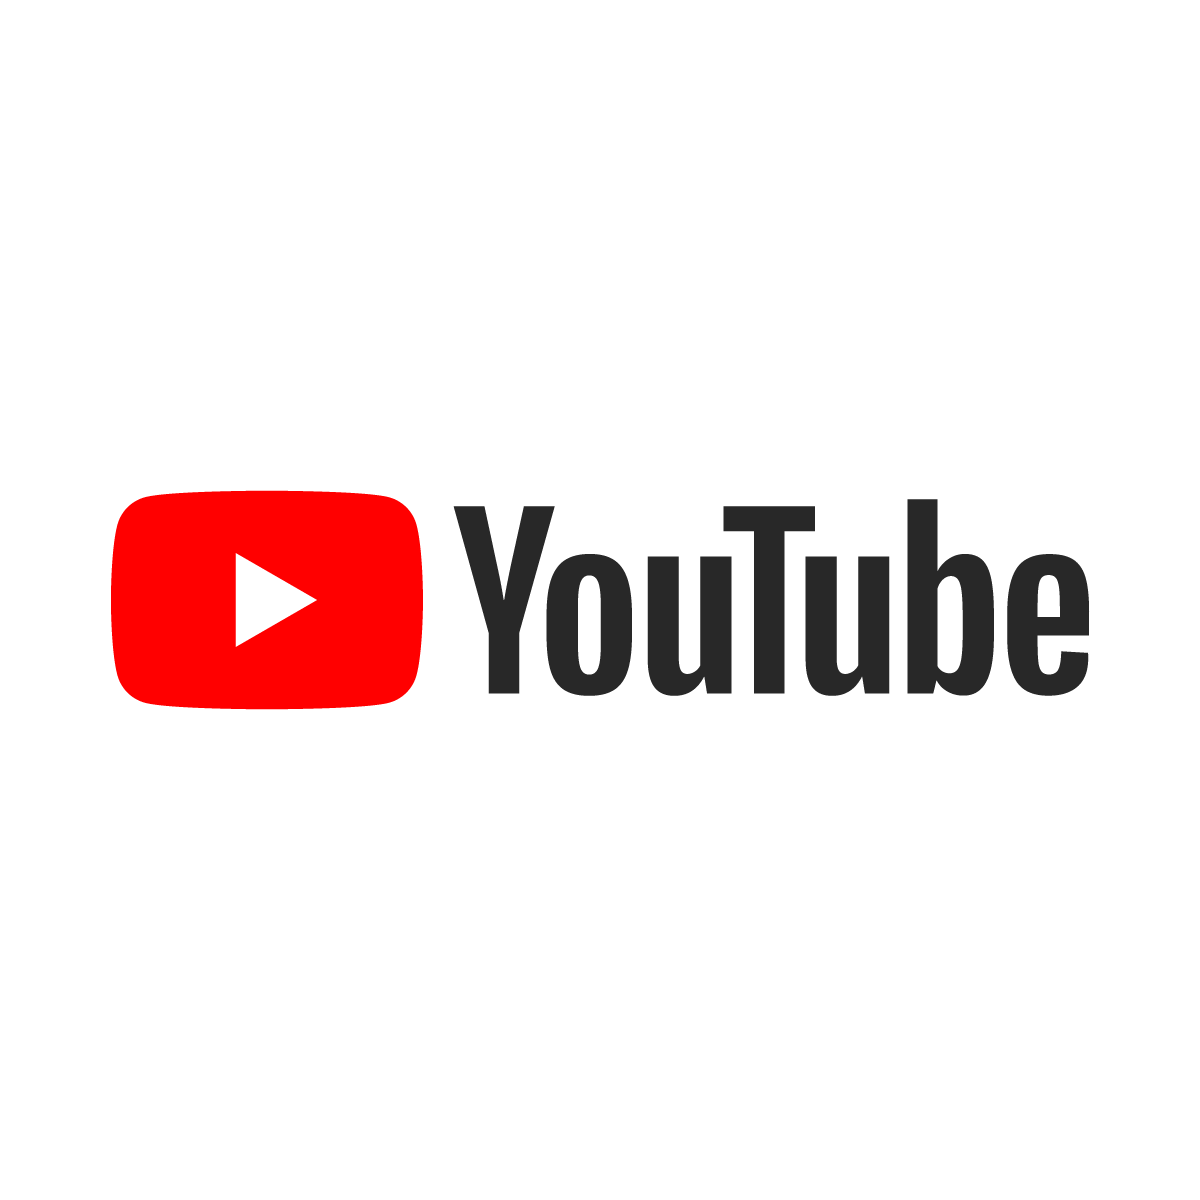 Youtube เริ่มต้นให้ผู้ใช้ร่วมโหวตฟีเจอร์ใหม่ที่อยากได้บน TV และคอนโซล